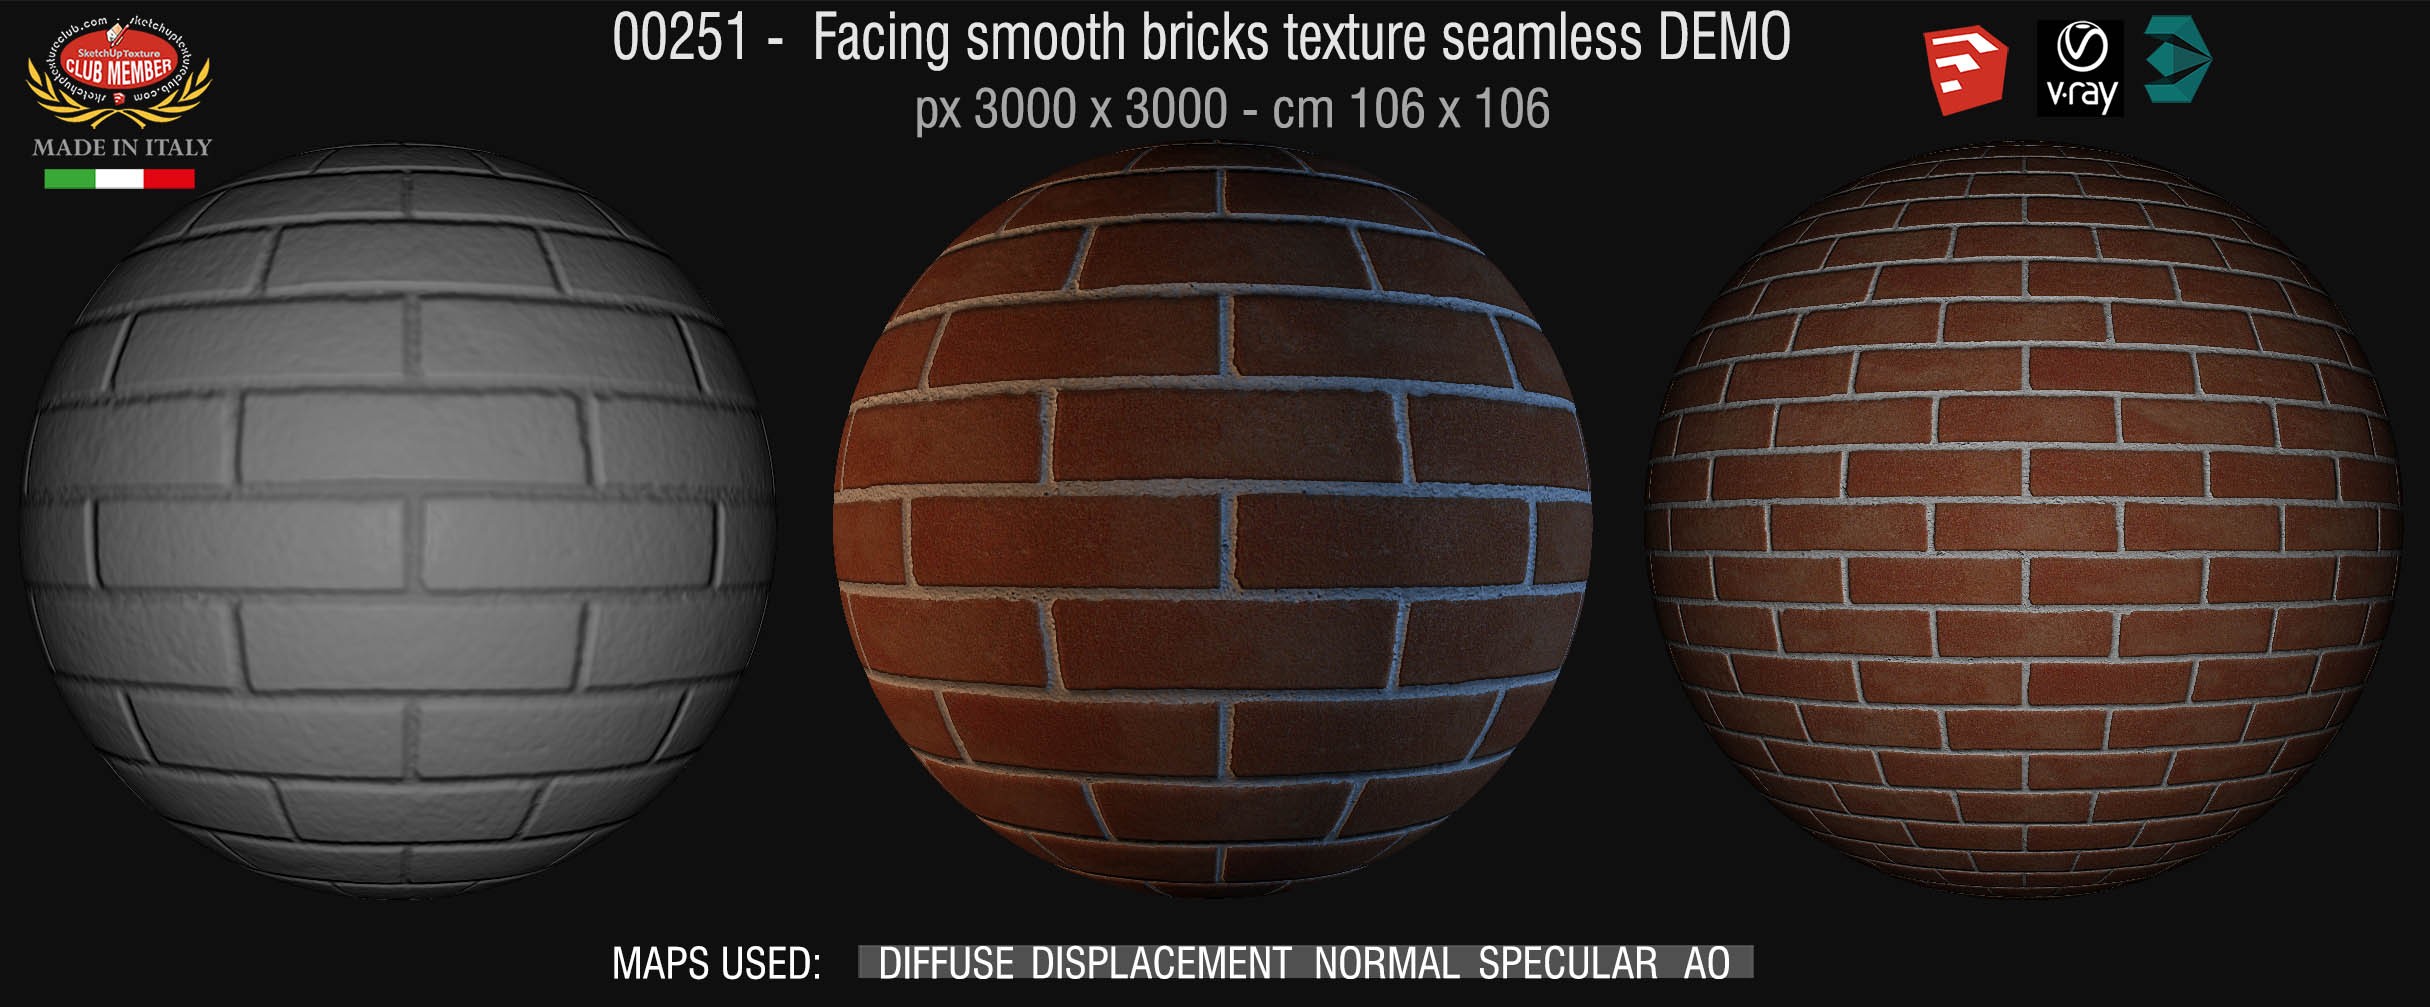 00251 Facing smooth bricks texture seamless + maps DEMO